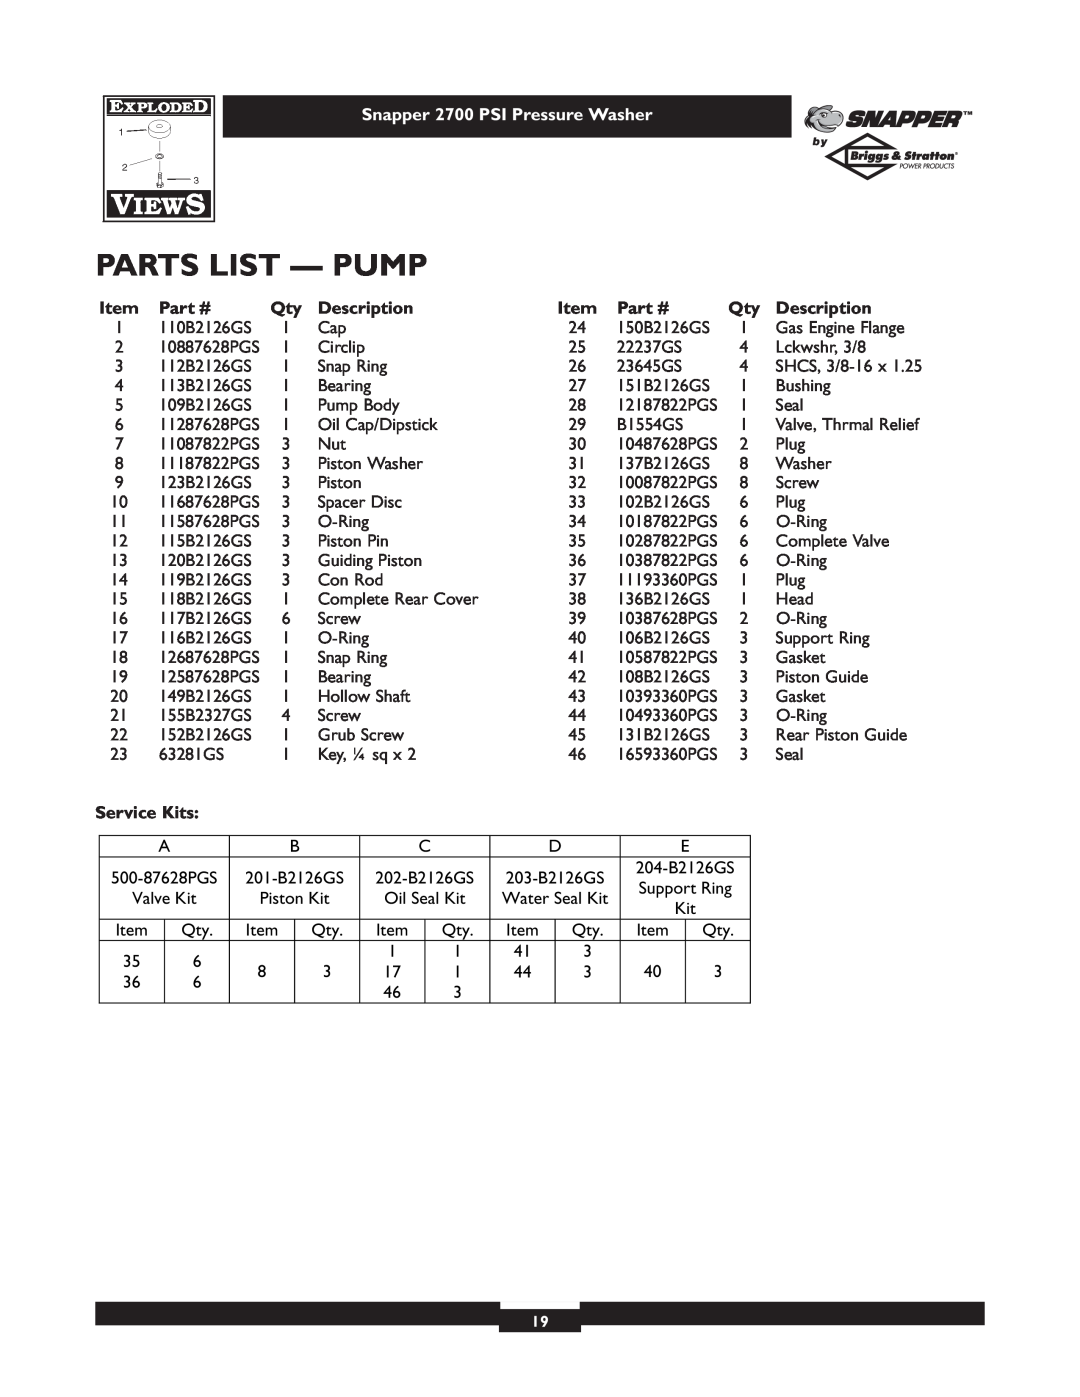 Snapper 1661-0 owner manual Parts List - Pump, Service Kits, Snapper 2700 PSI Pressure Washer, Description 